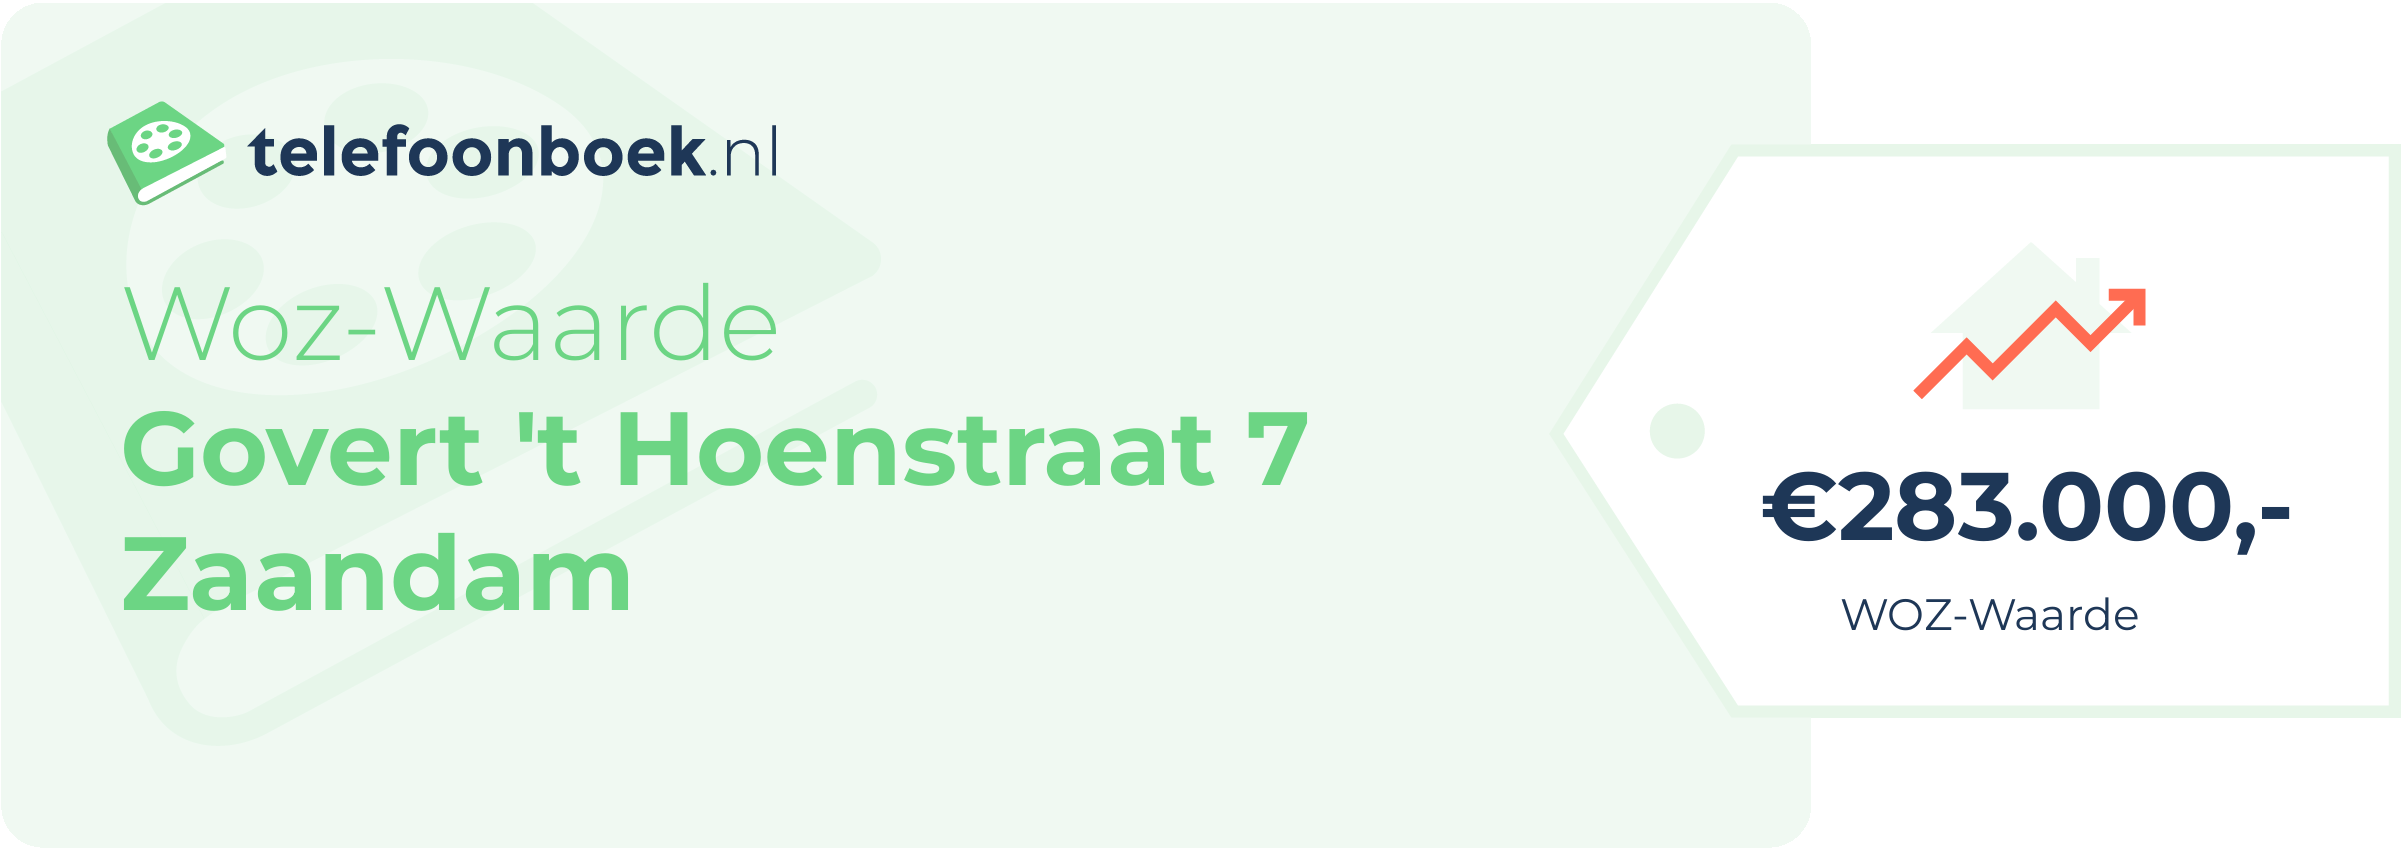 WOZ-waarde Govert 't Hoenstraat 7 Zaandam